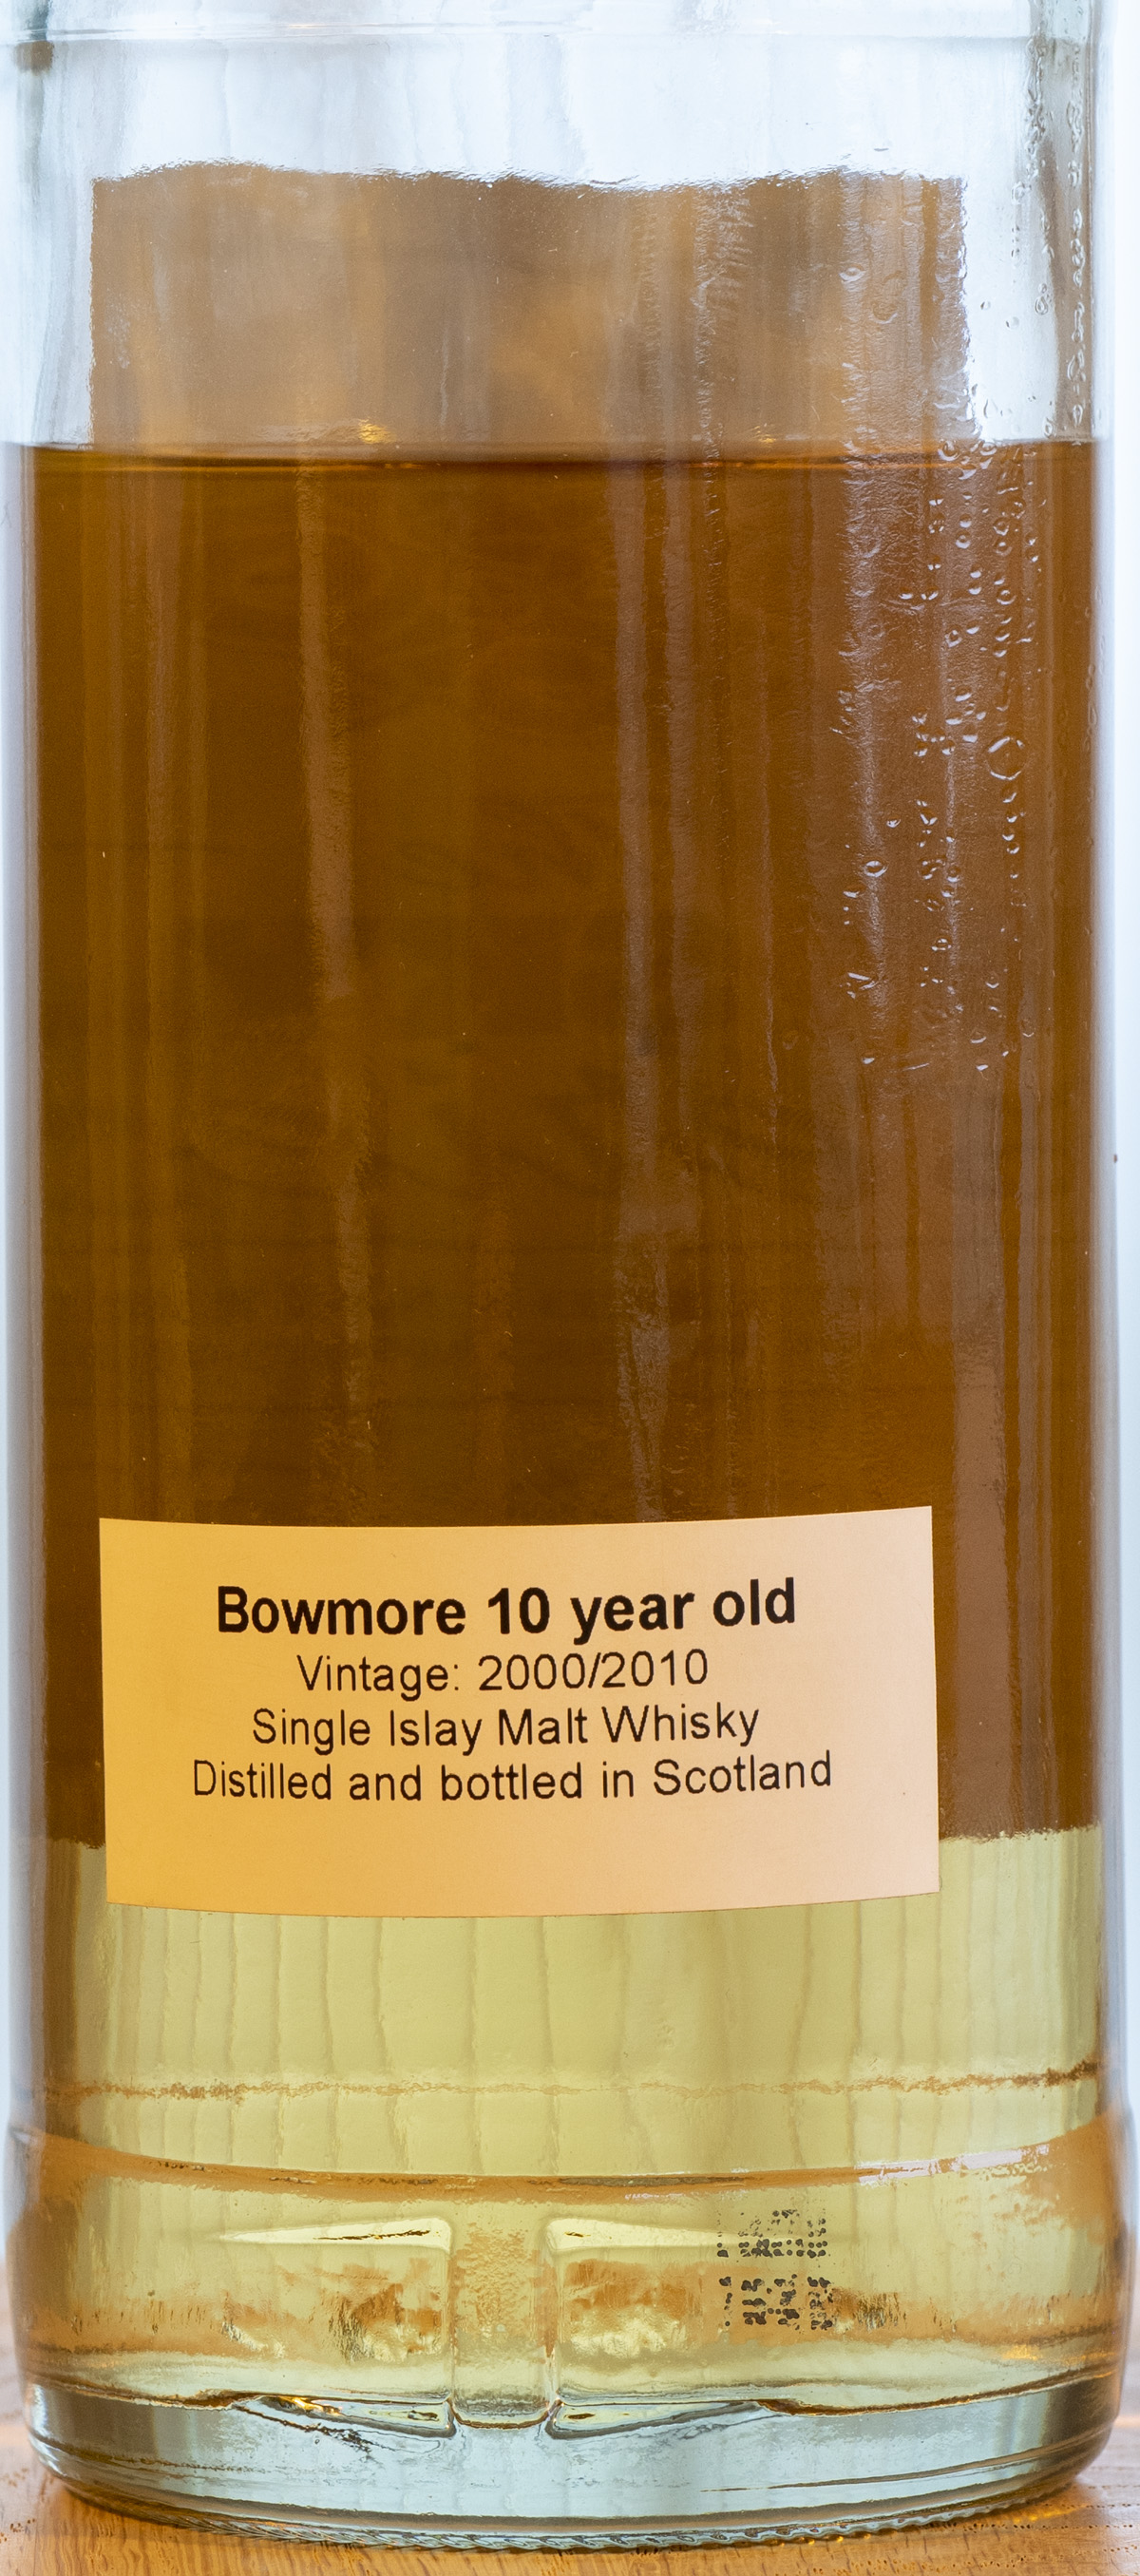 Billede: PHC_3944 - The whisky.dk series - Bowmore 2000 - back.jpg